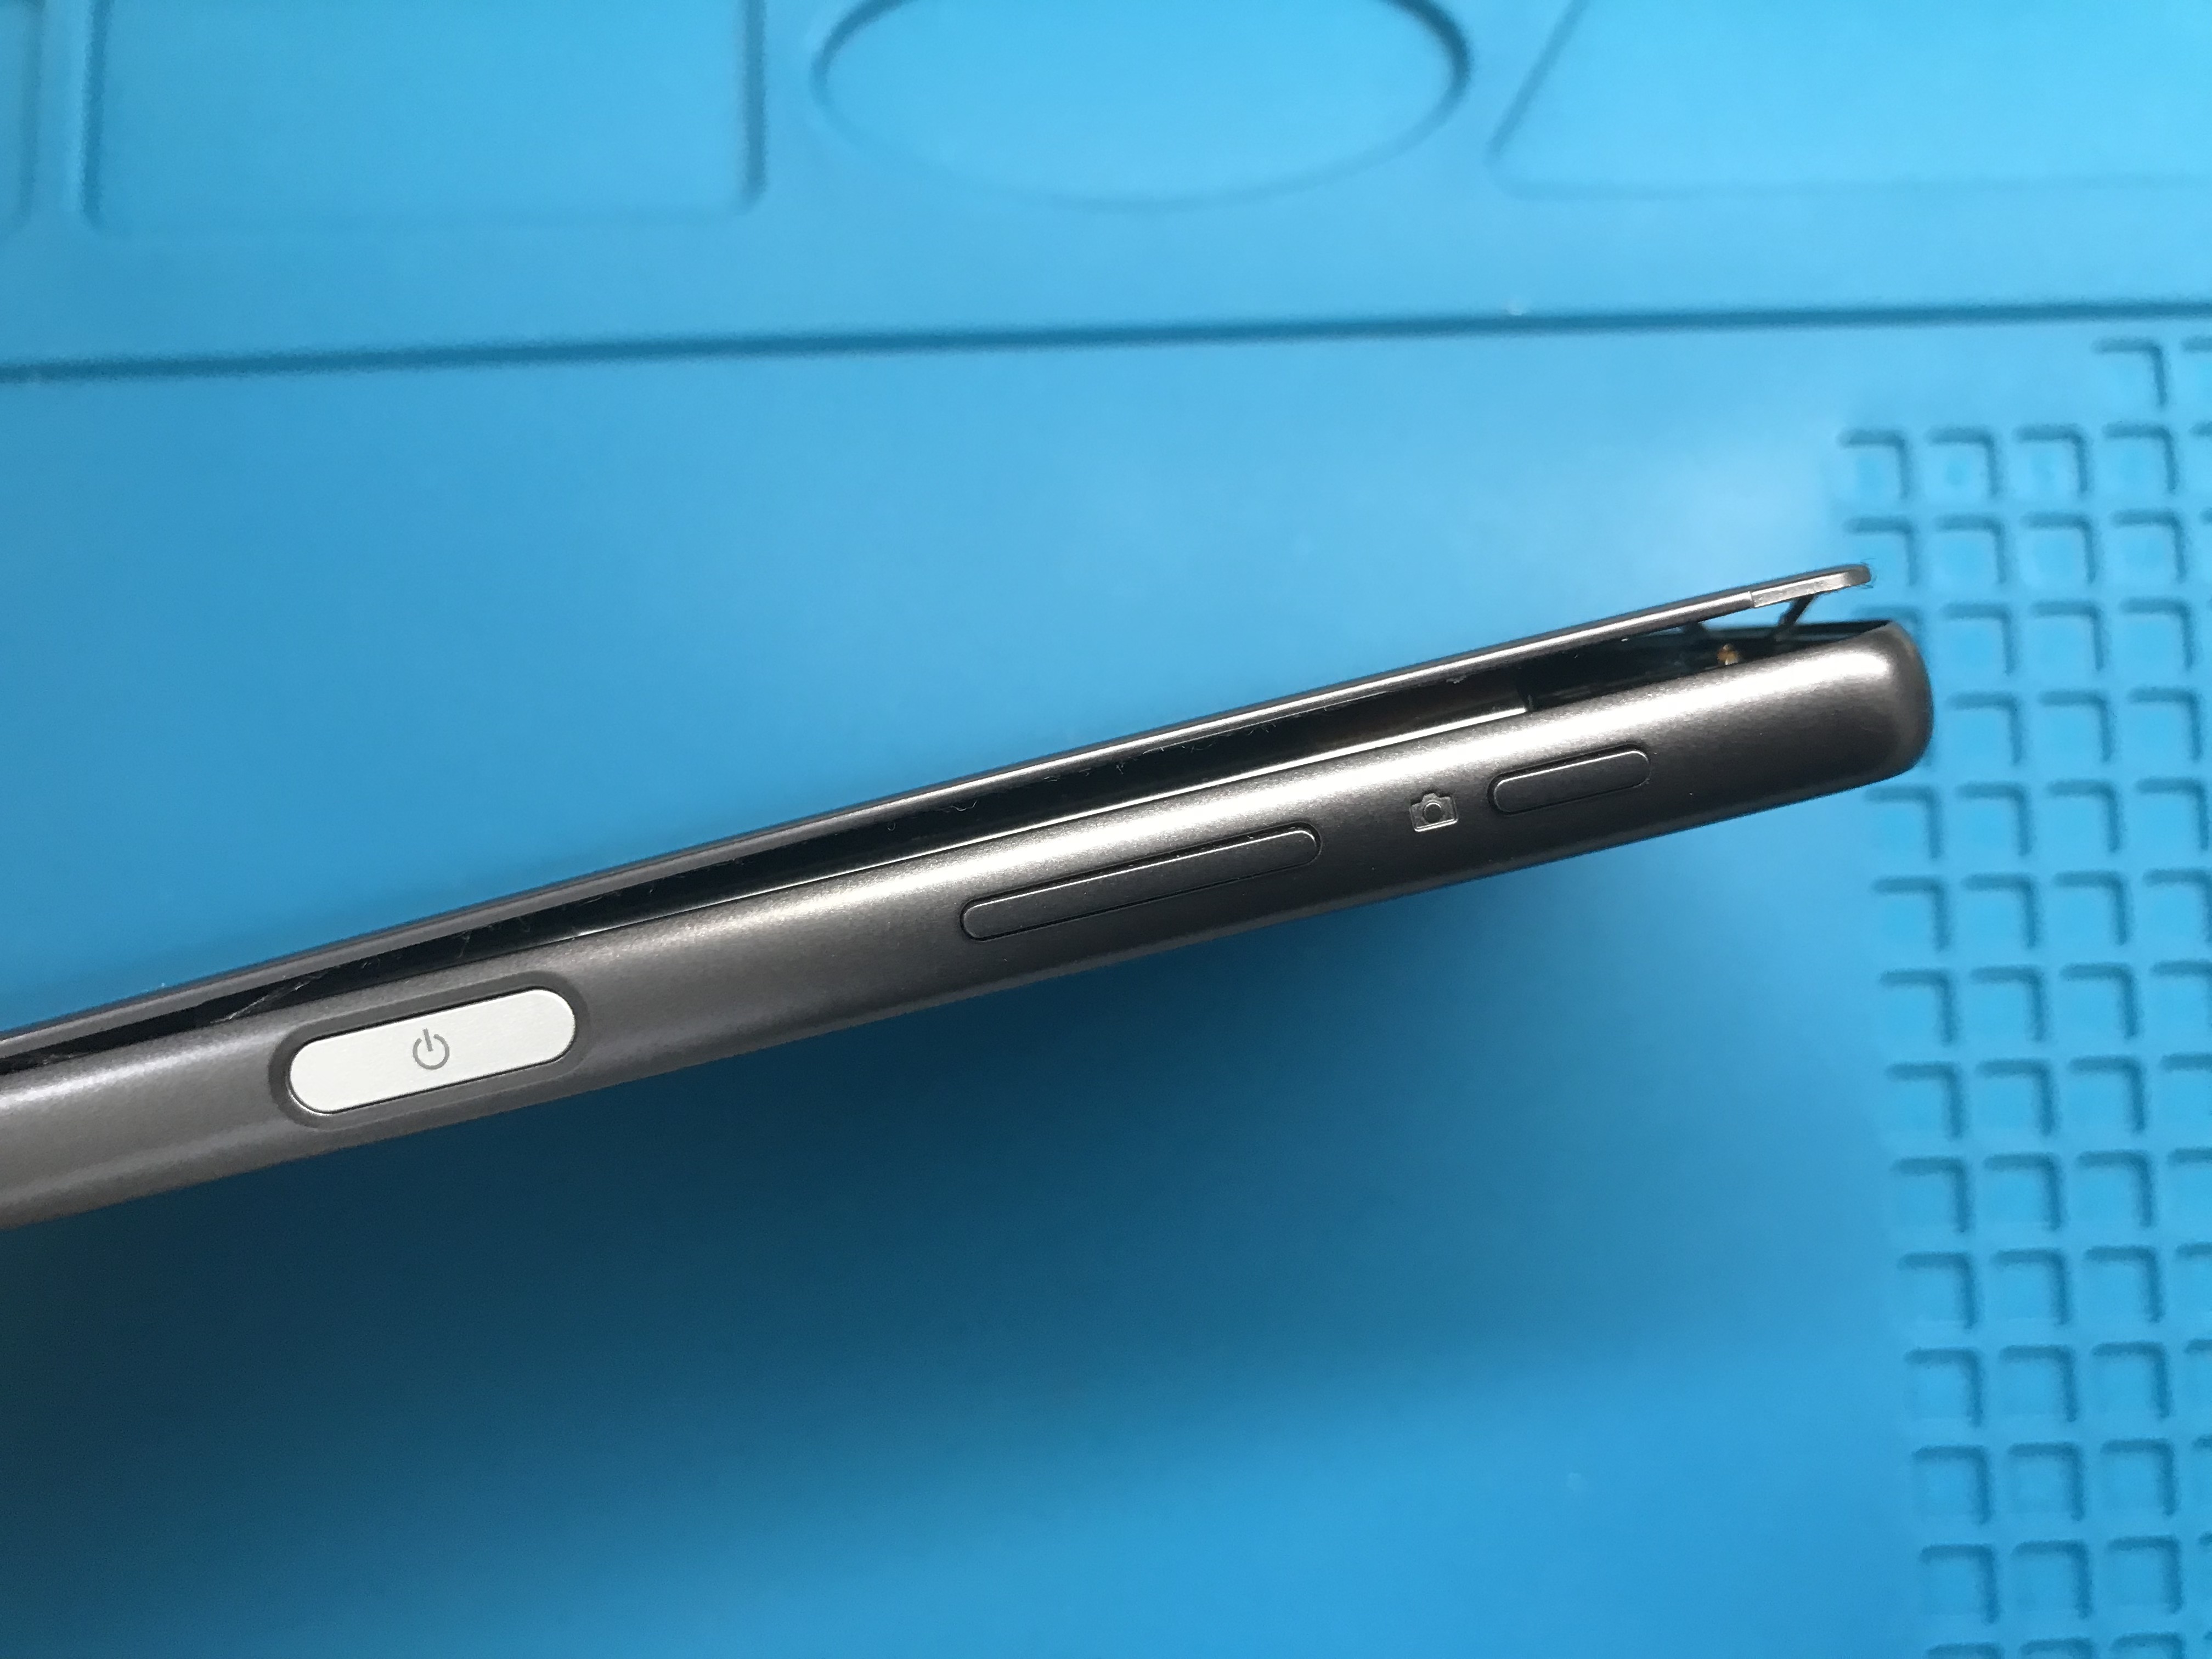 Xperia X Performance ドコモ So 04h のバッテリーが膨張でバックパネル浮きも電池交換で改善 Xperia Galaxy Zenfone Huawei Nexus修理のアンドロイドホスピタル